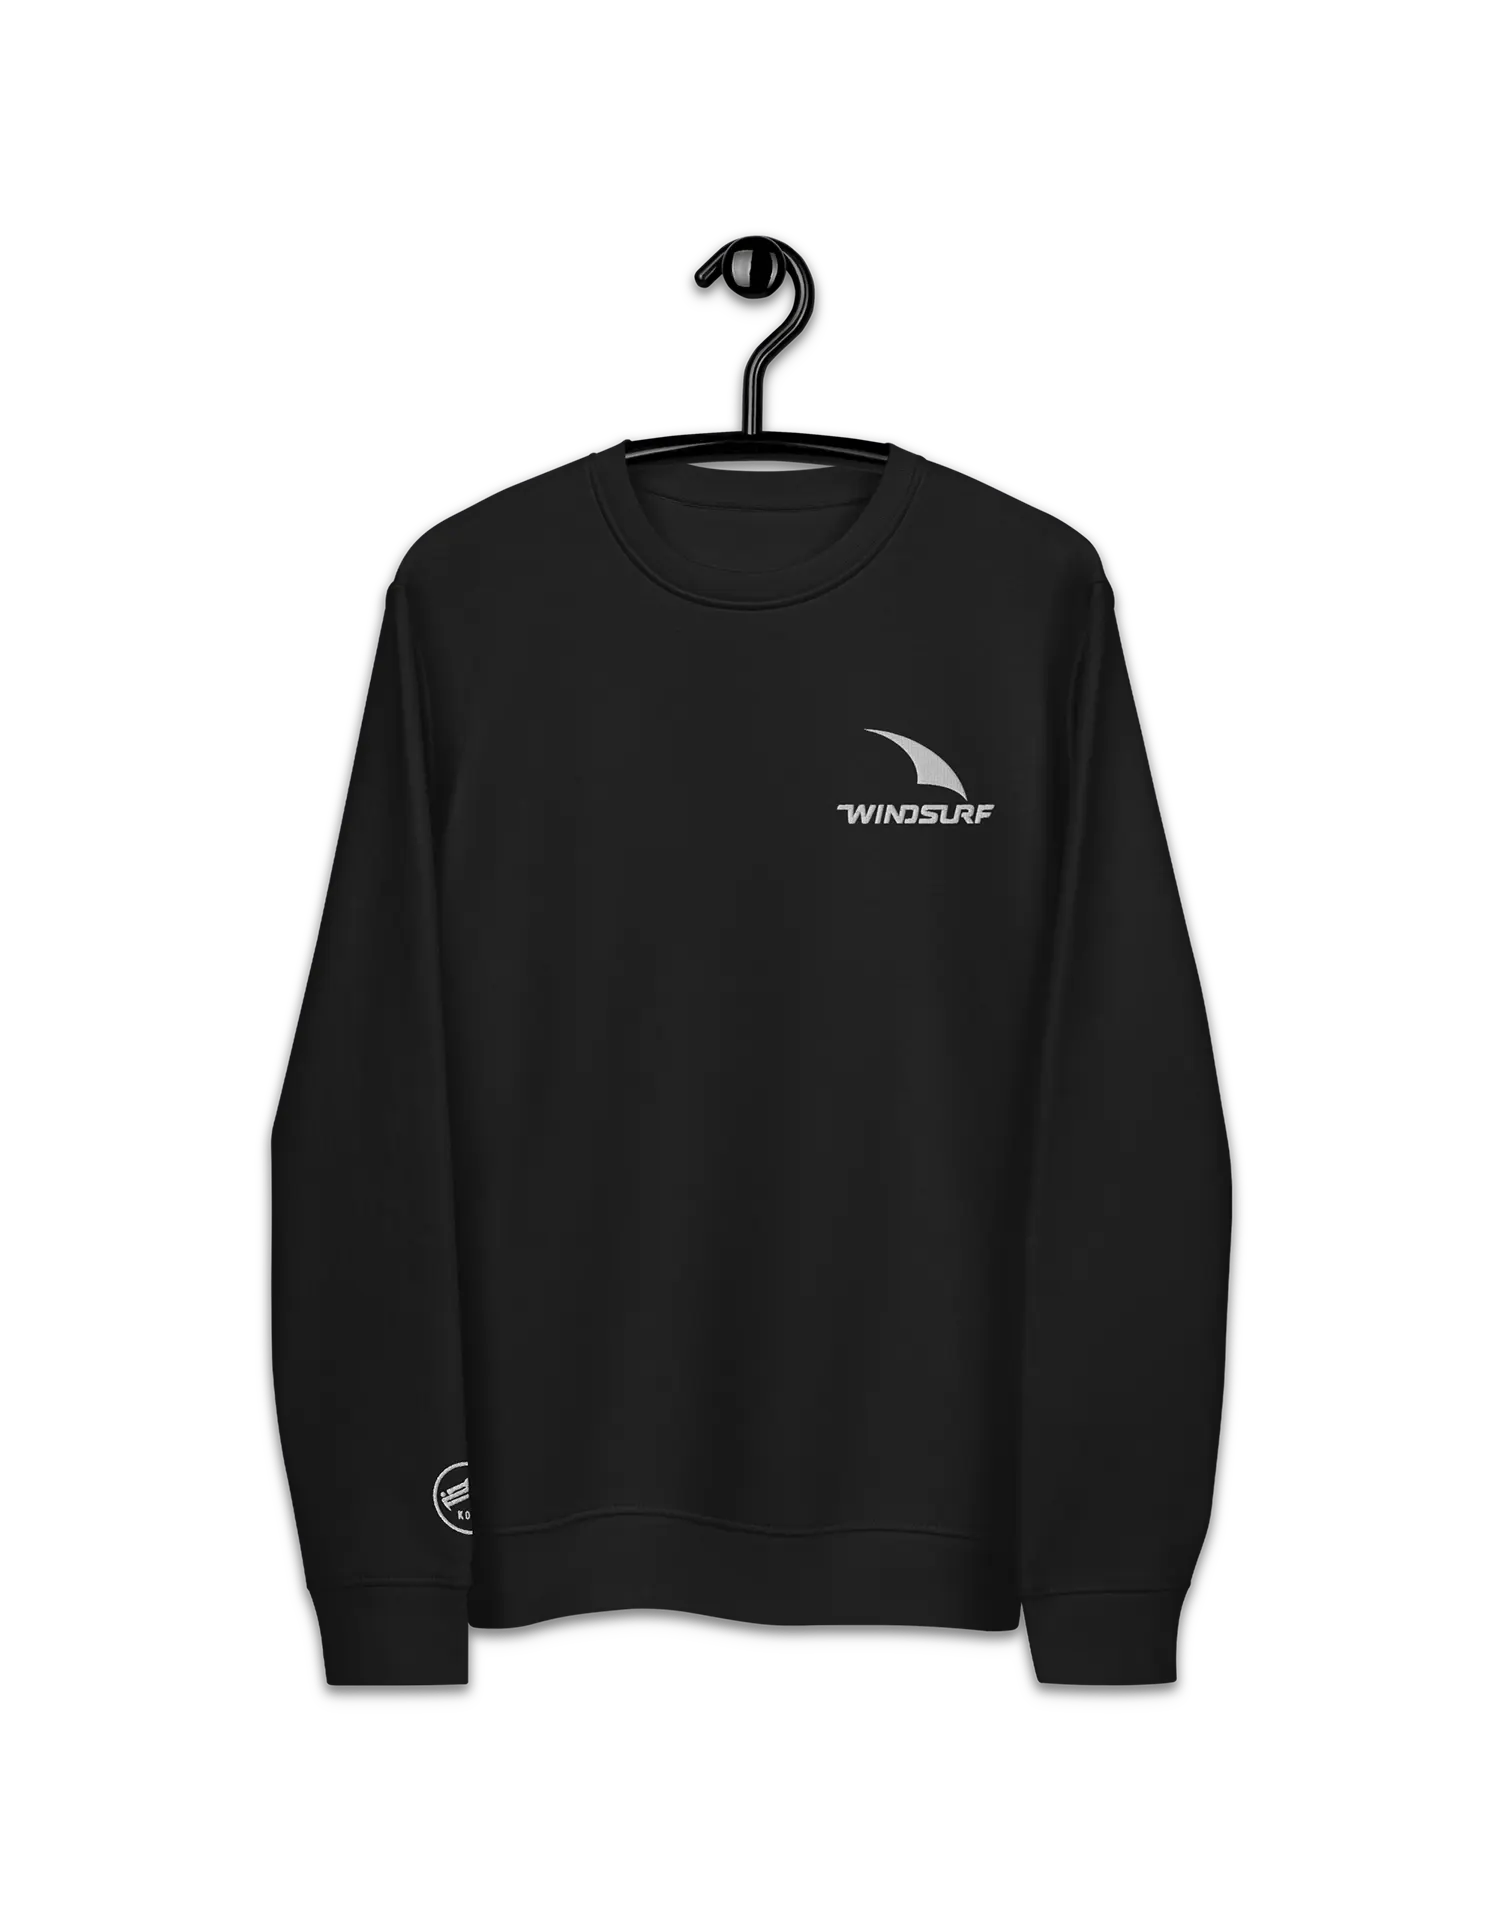 Windsurf Logo Embroidered Black Premium Organic Cotton Eco-friendly Sweater by KOAV